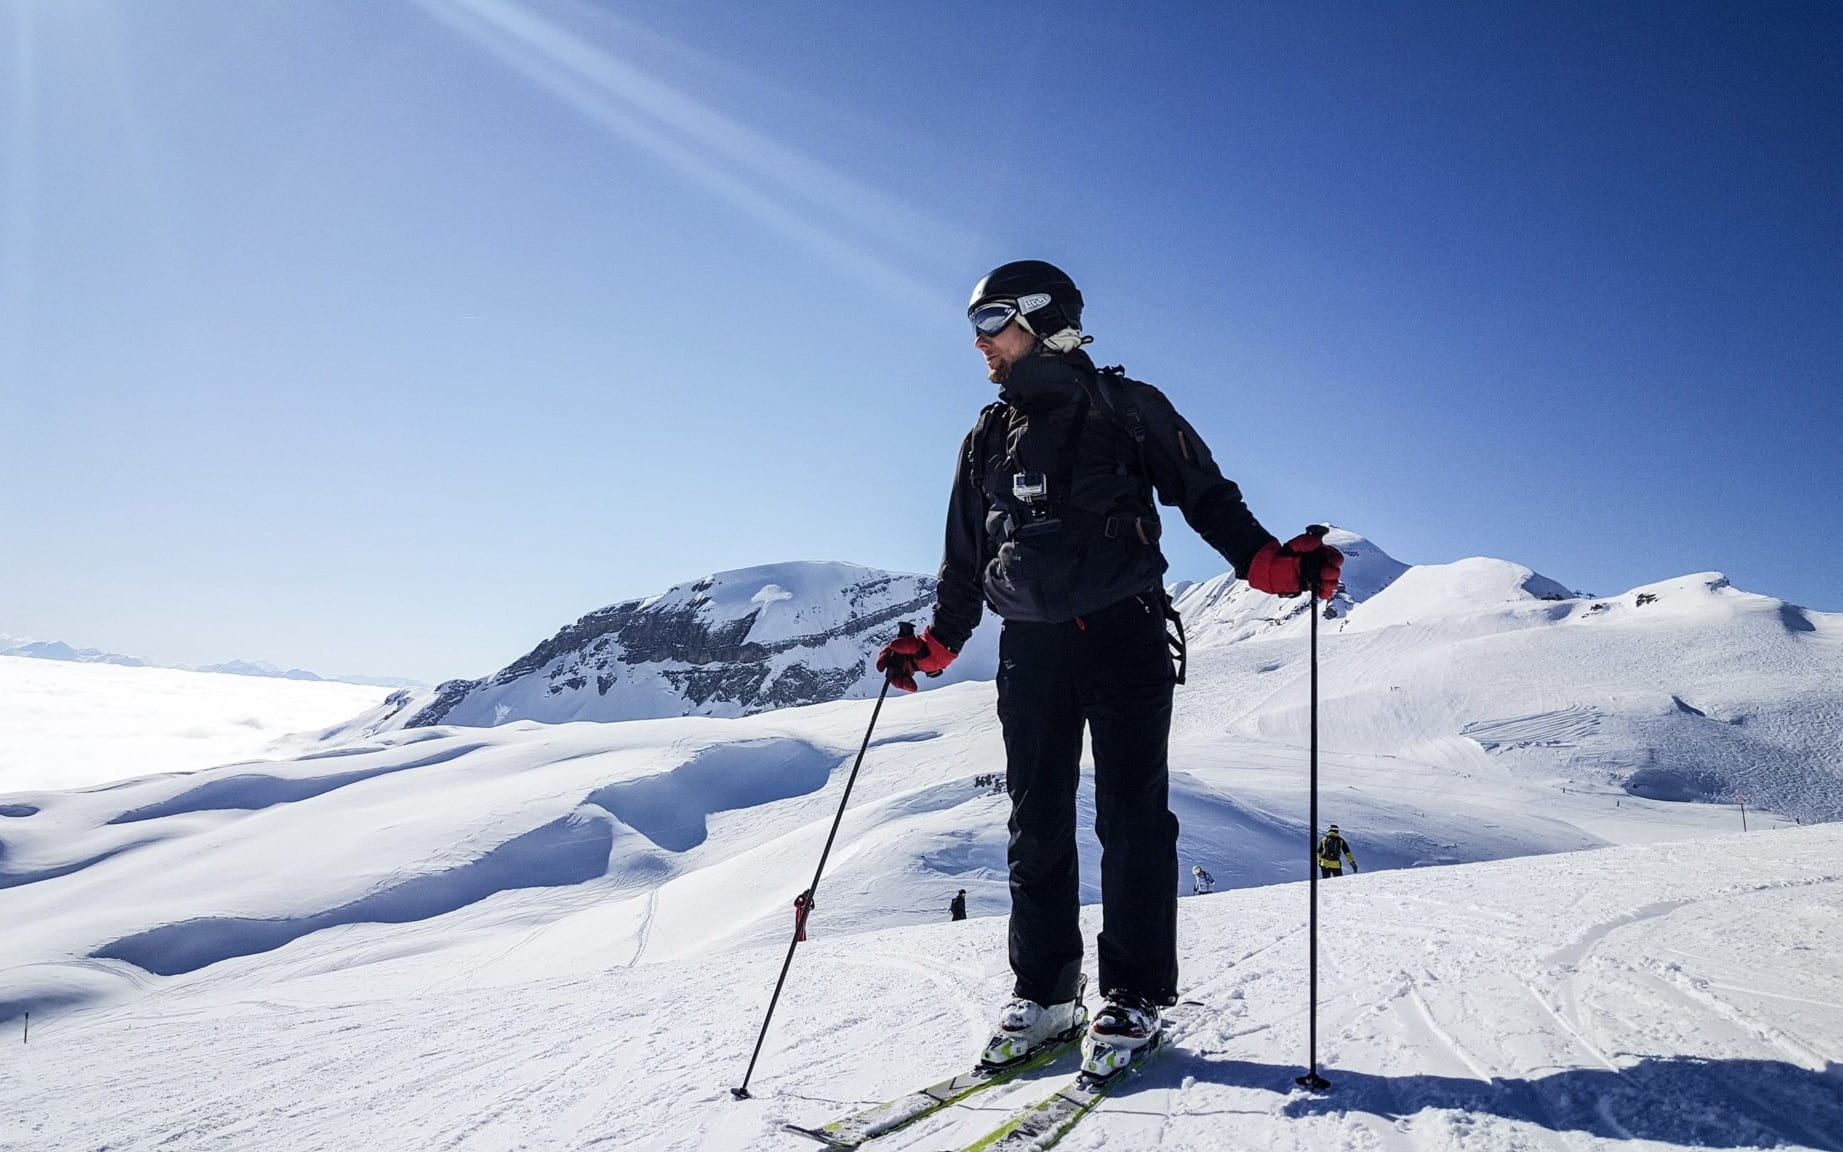 Man using ski equipment on holiday